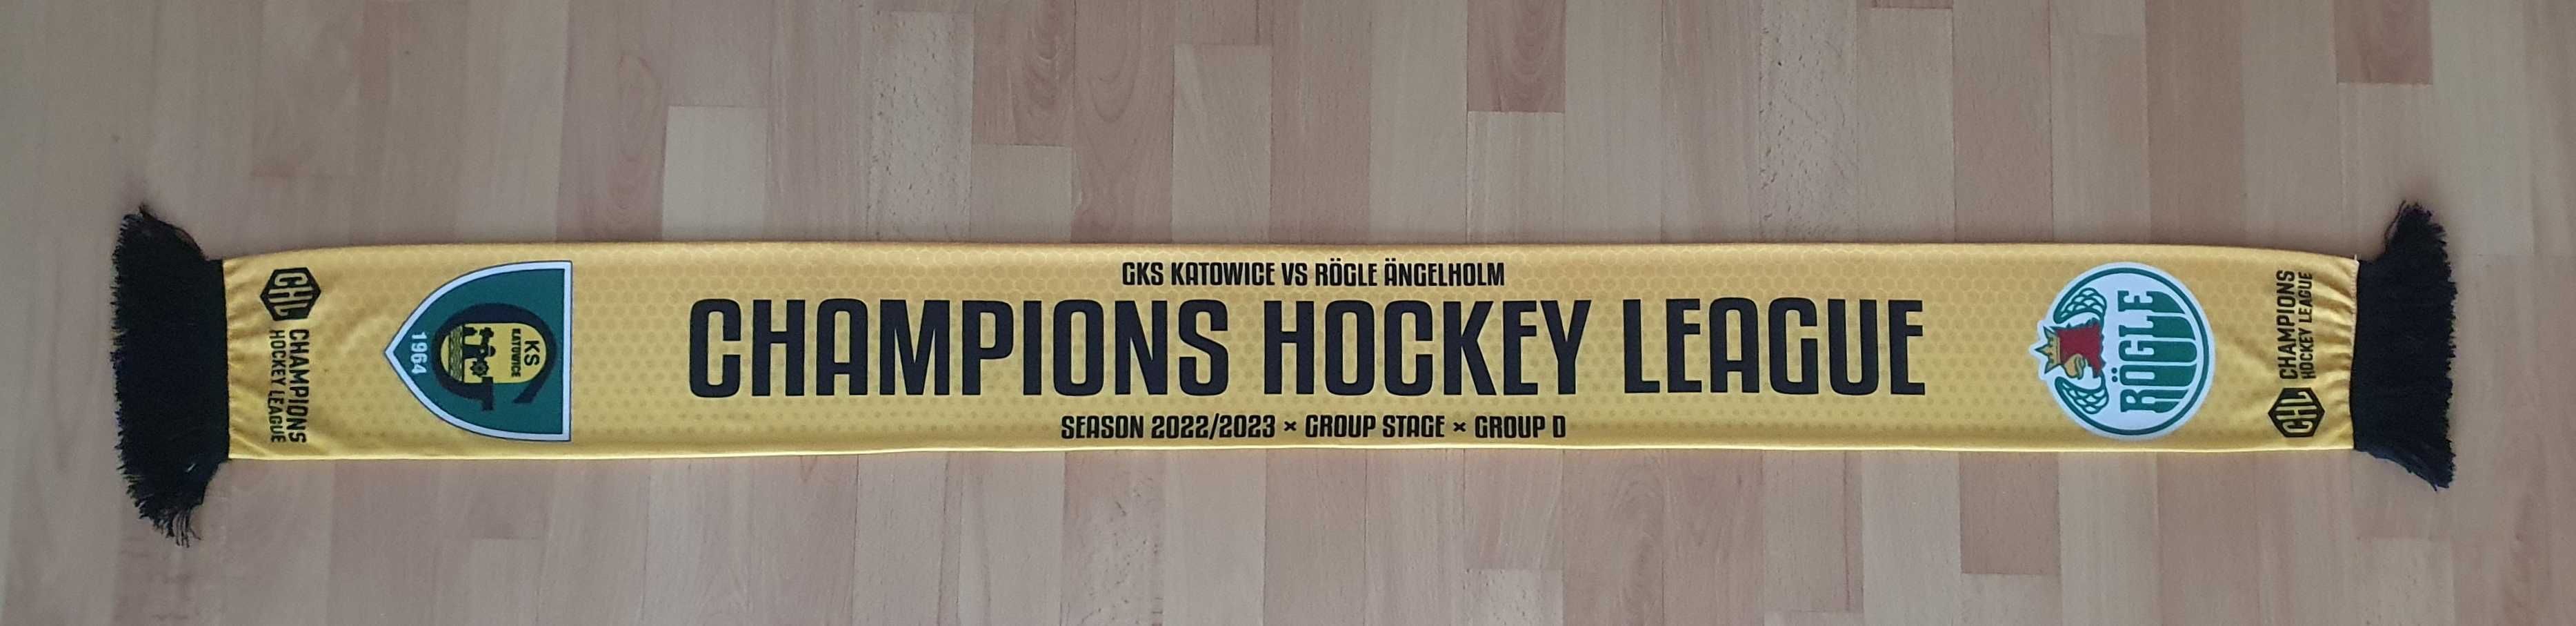 GKS Katowice (Hokej) - Szalik okazjonalny CHL (Katowice-Rogle)